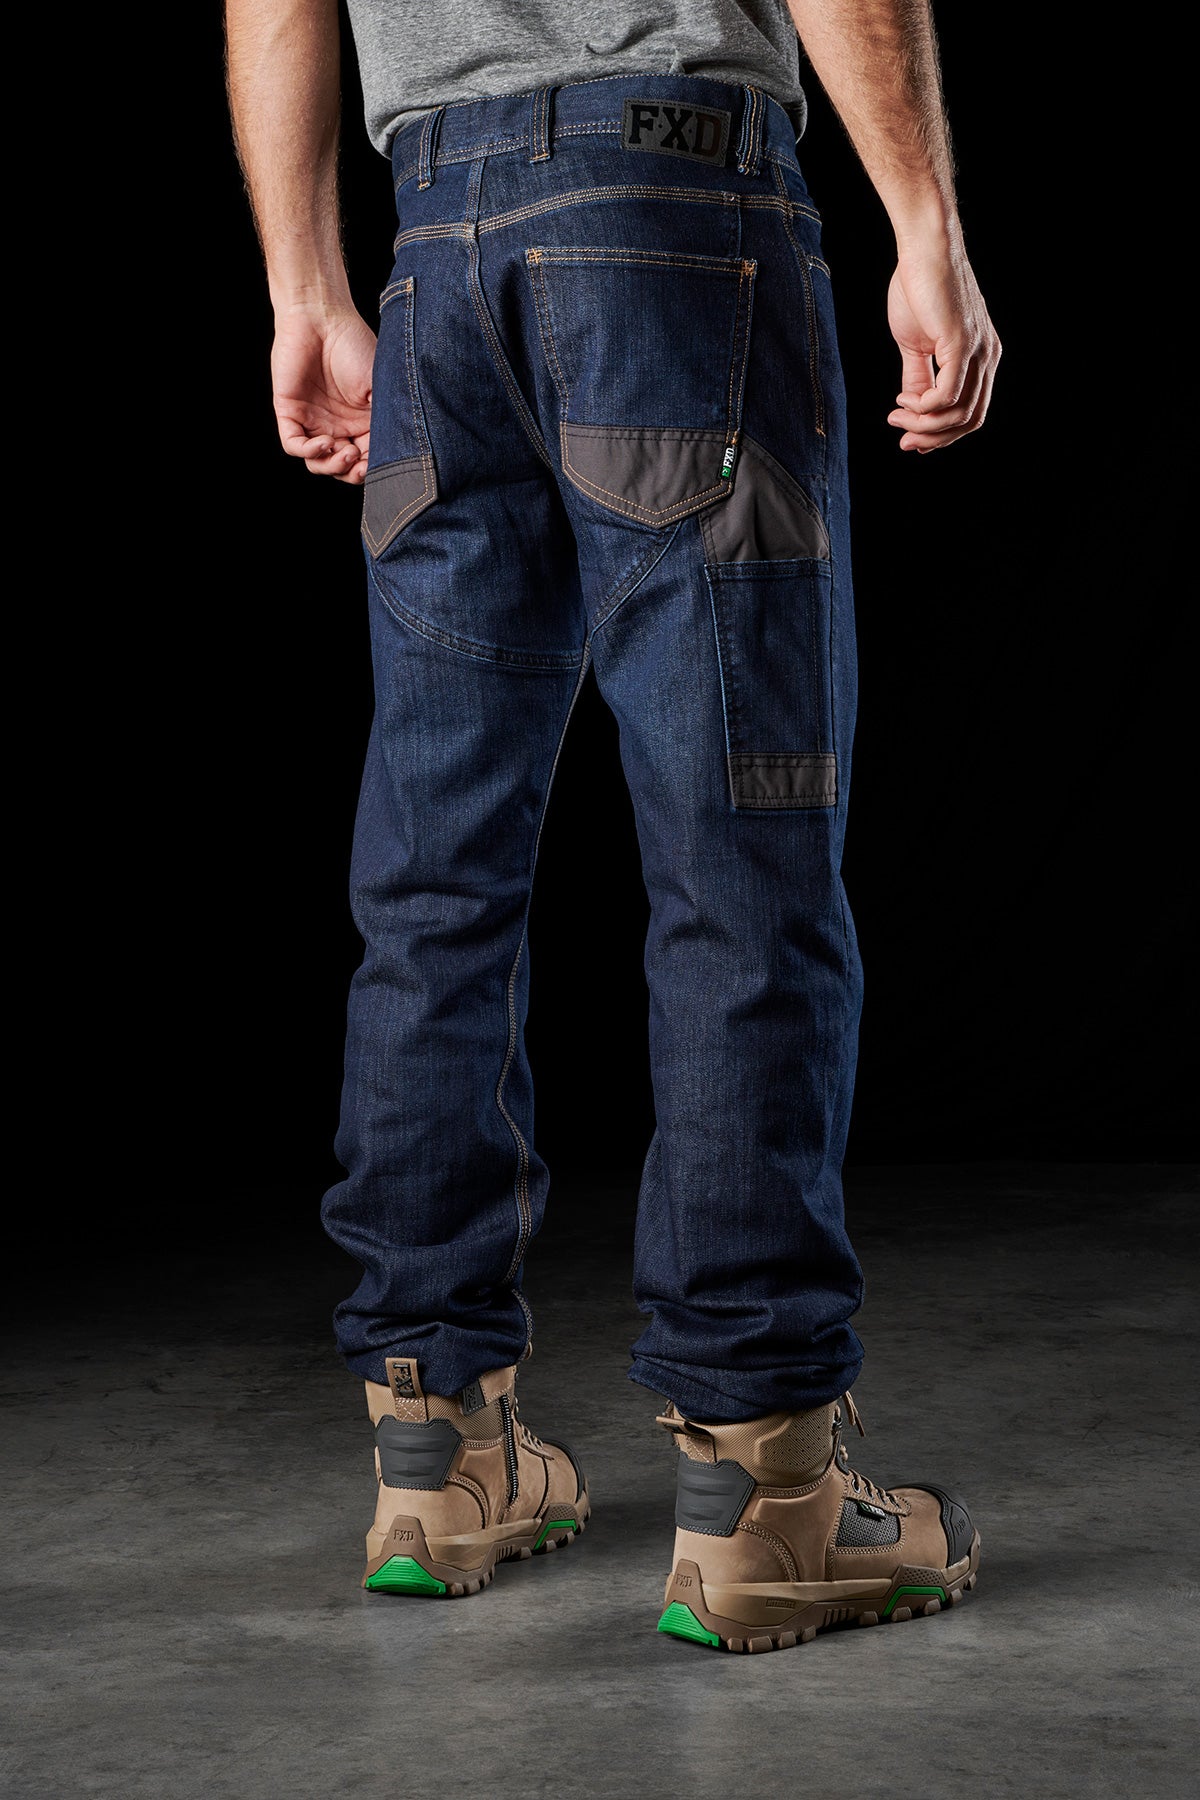 FXD - WD-1 Work Jeans | Hip Pocket Workwear & Safety